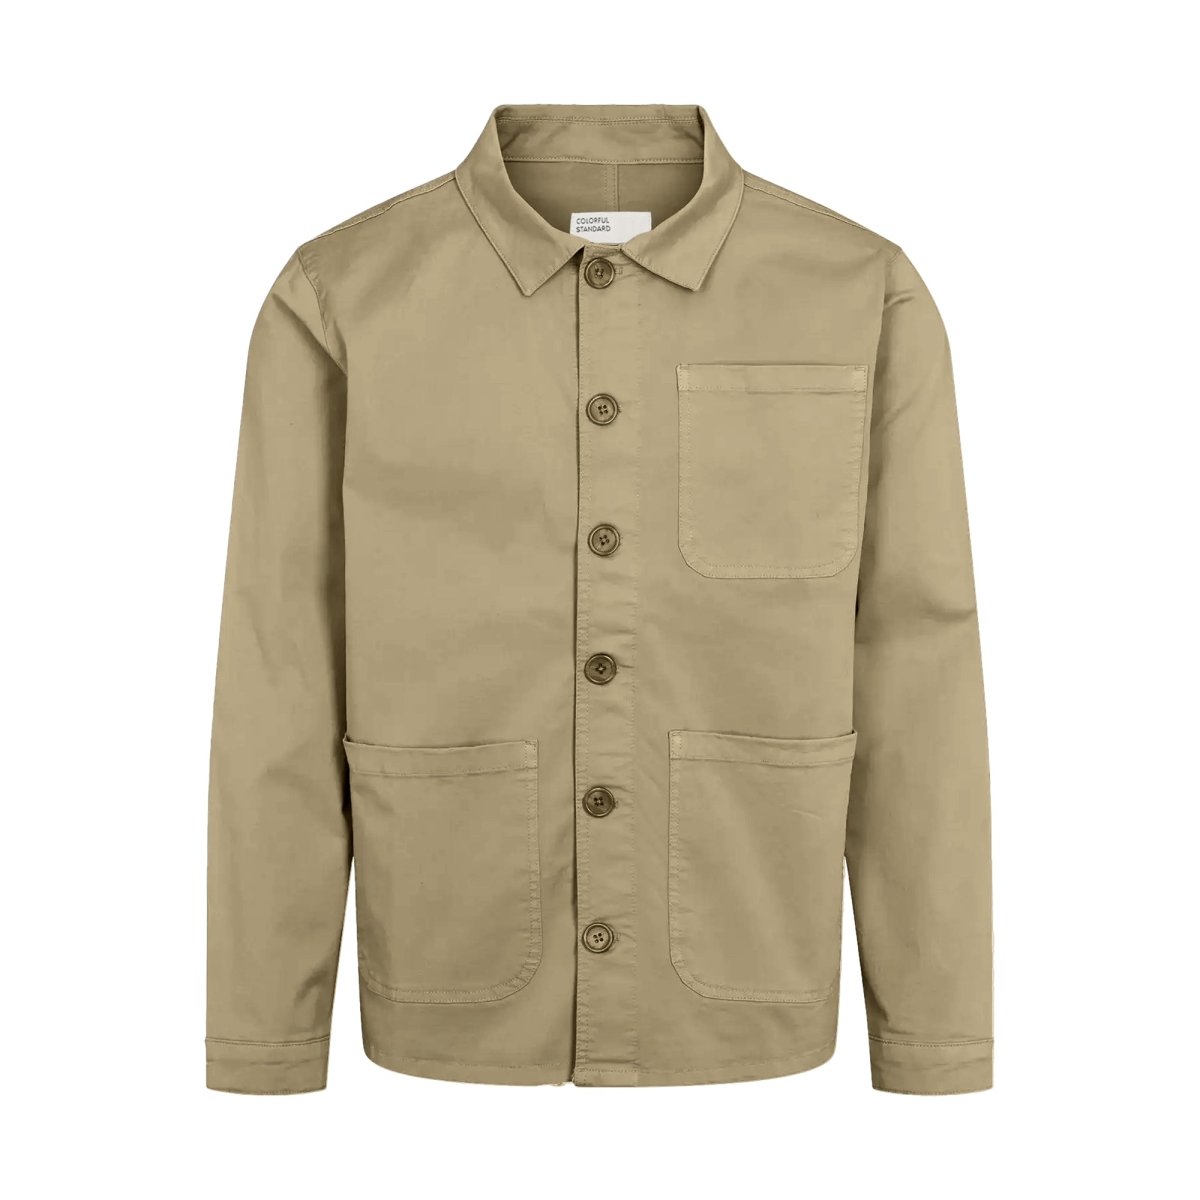 Colorful Workwear Jacket Desert Khaki - KYOTO - Colorful Standard